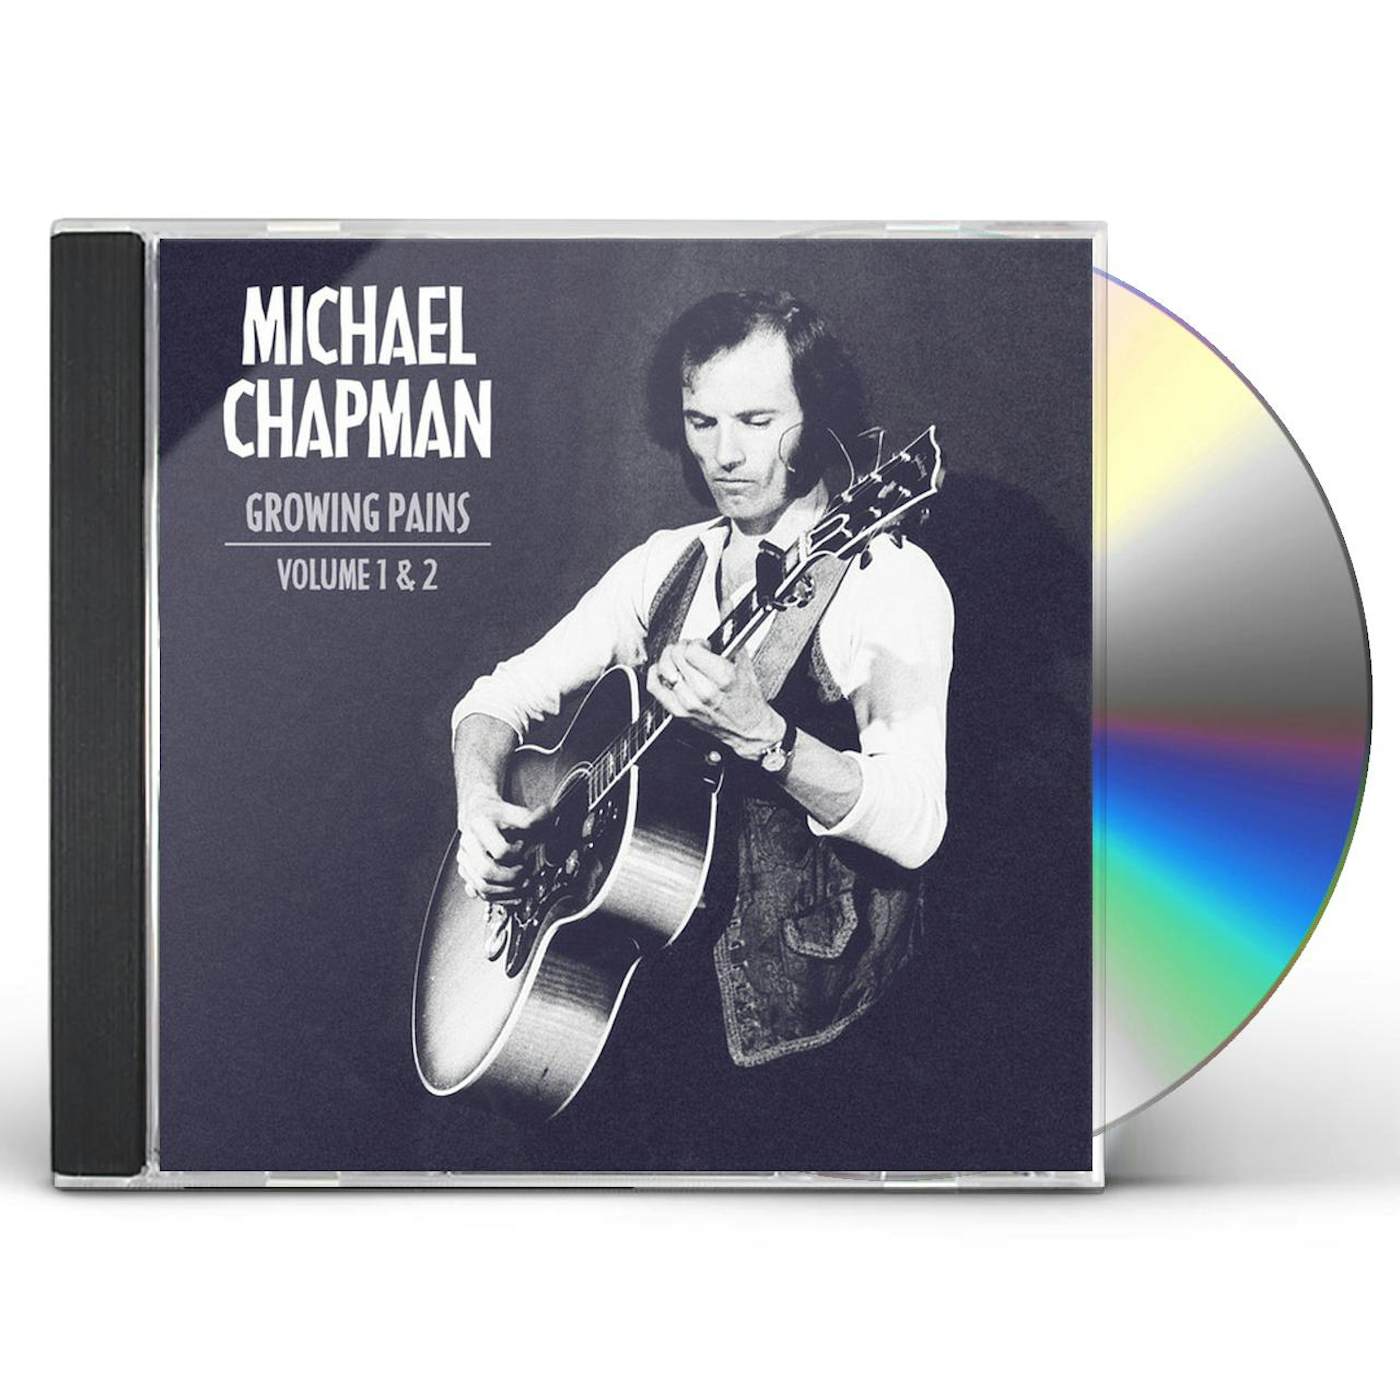 Michael Chapman GROWING PAINS 1 & 2 CD